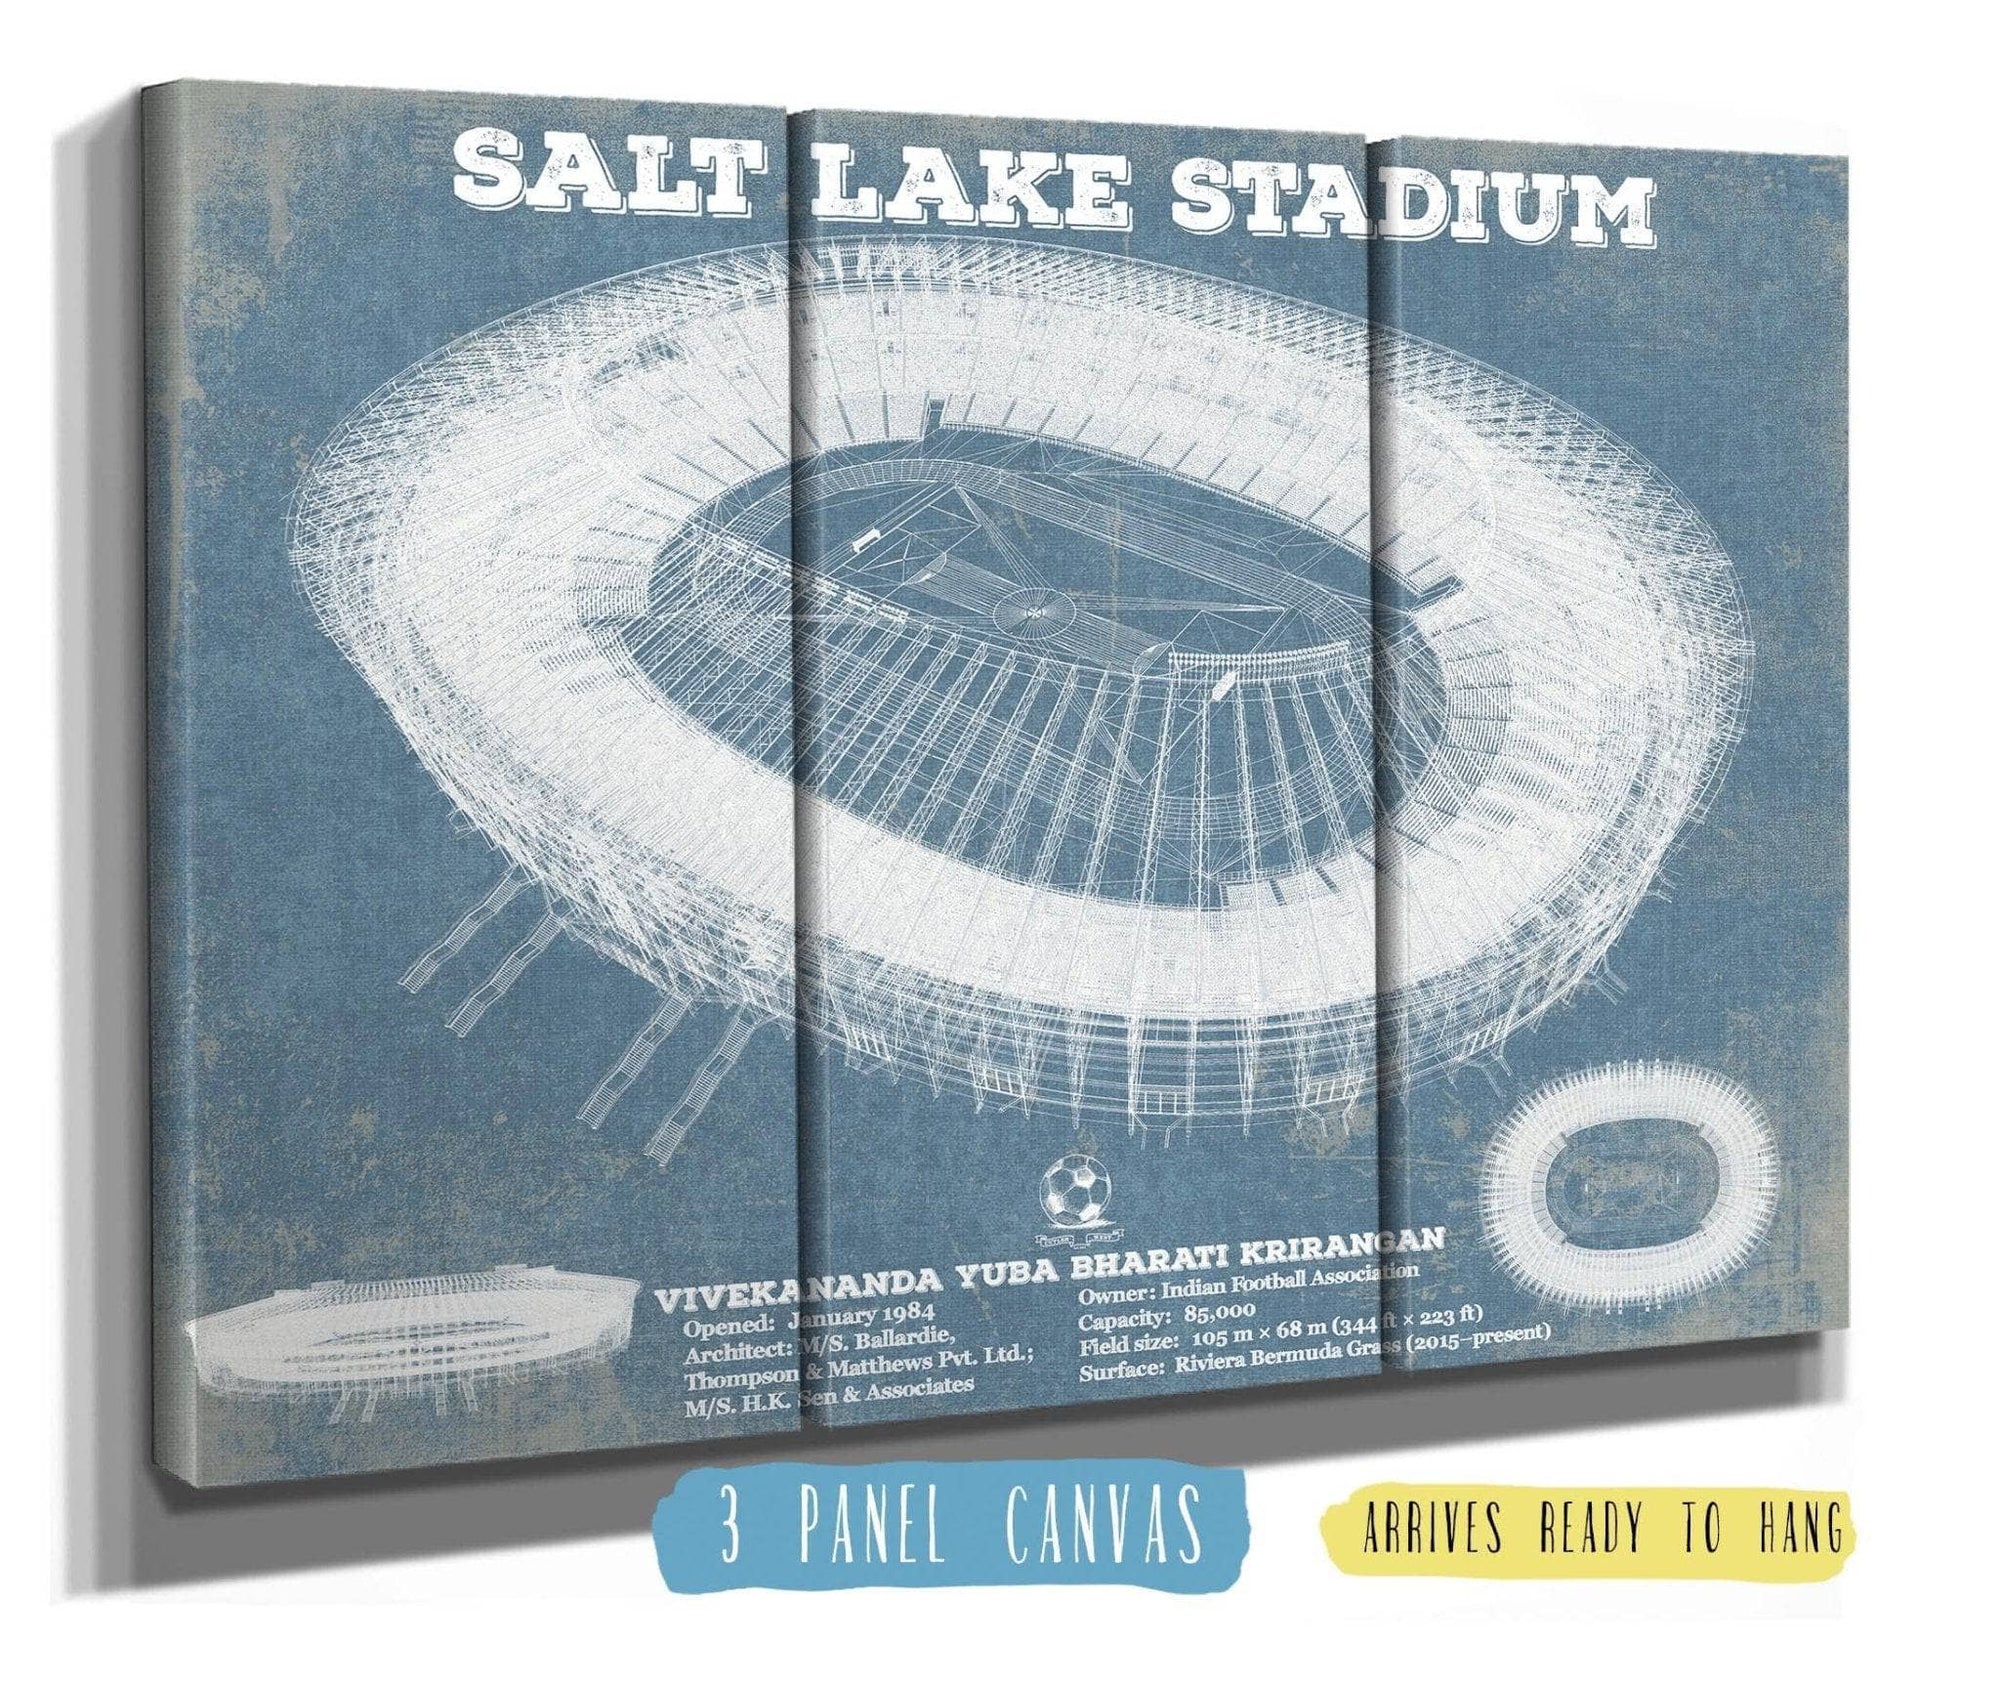 Cutler West India national football team - Salt Lake Stadium Soccer Print